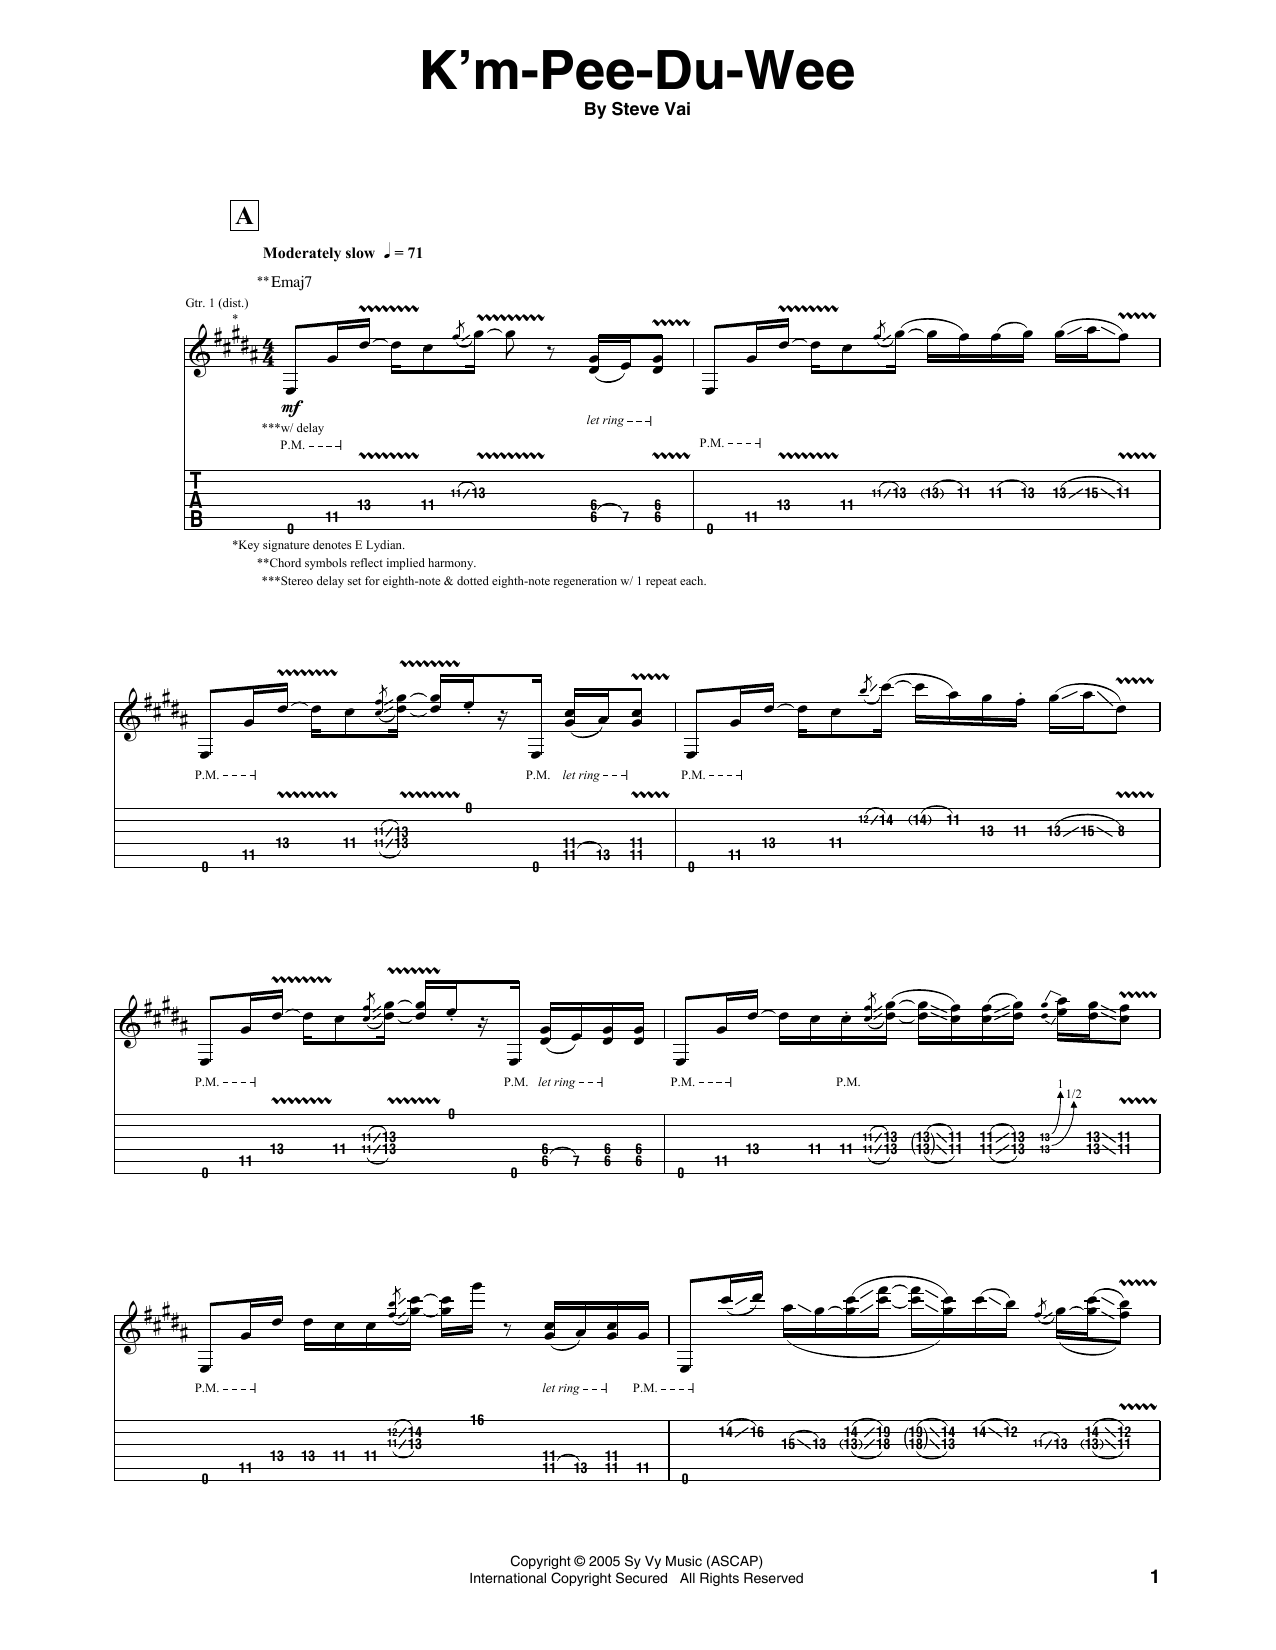 Steve Vai K'm-Pee-Du-Wee Sheet Music Notes & Chords for Guitar Tab - Download or Print PDF